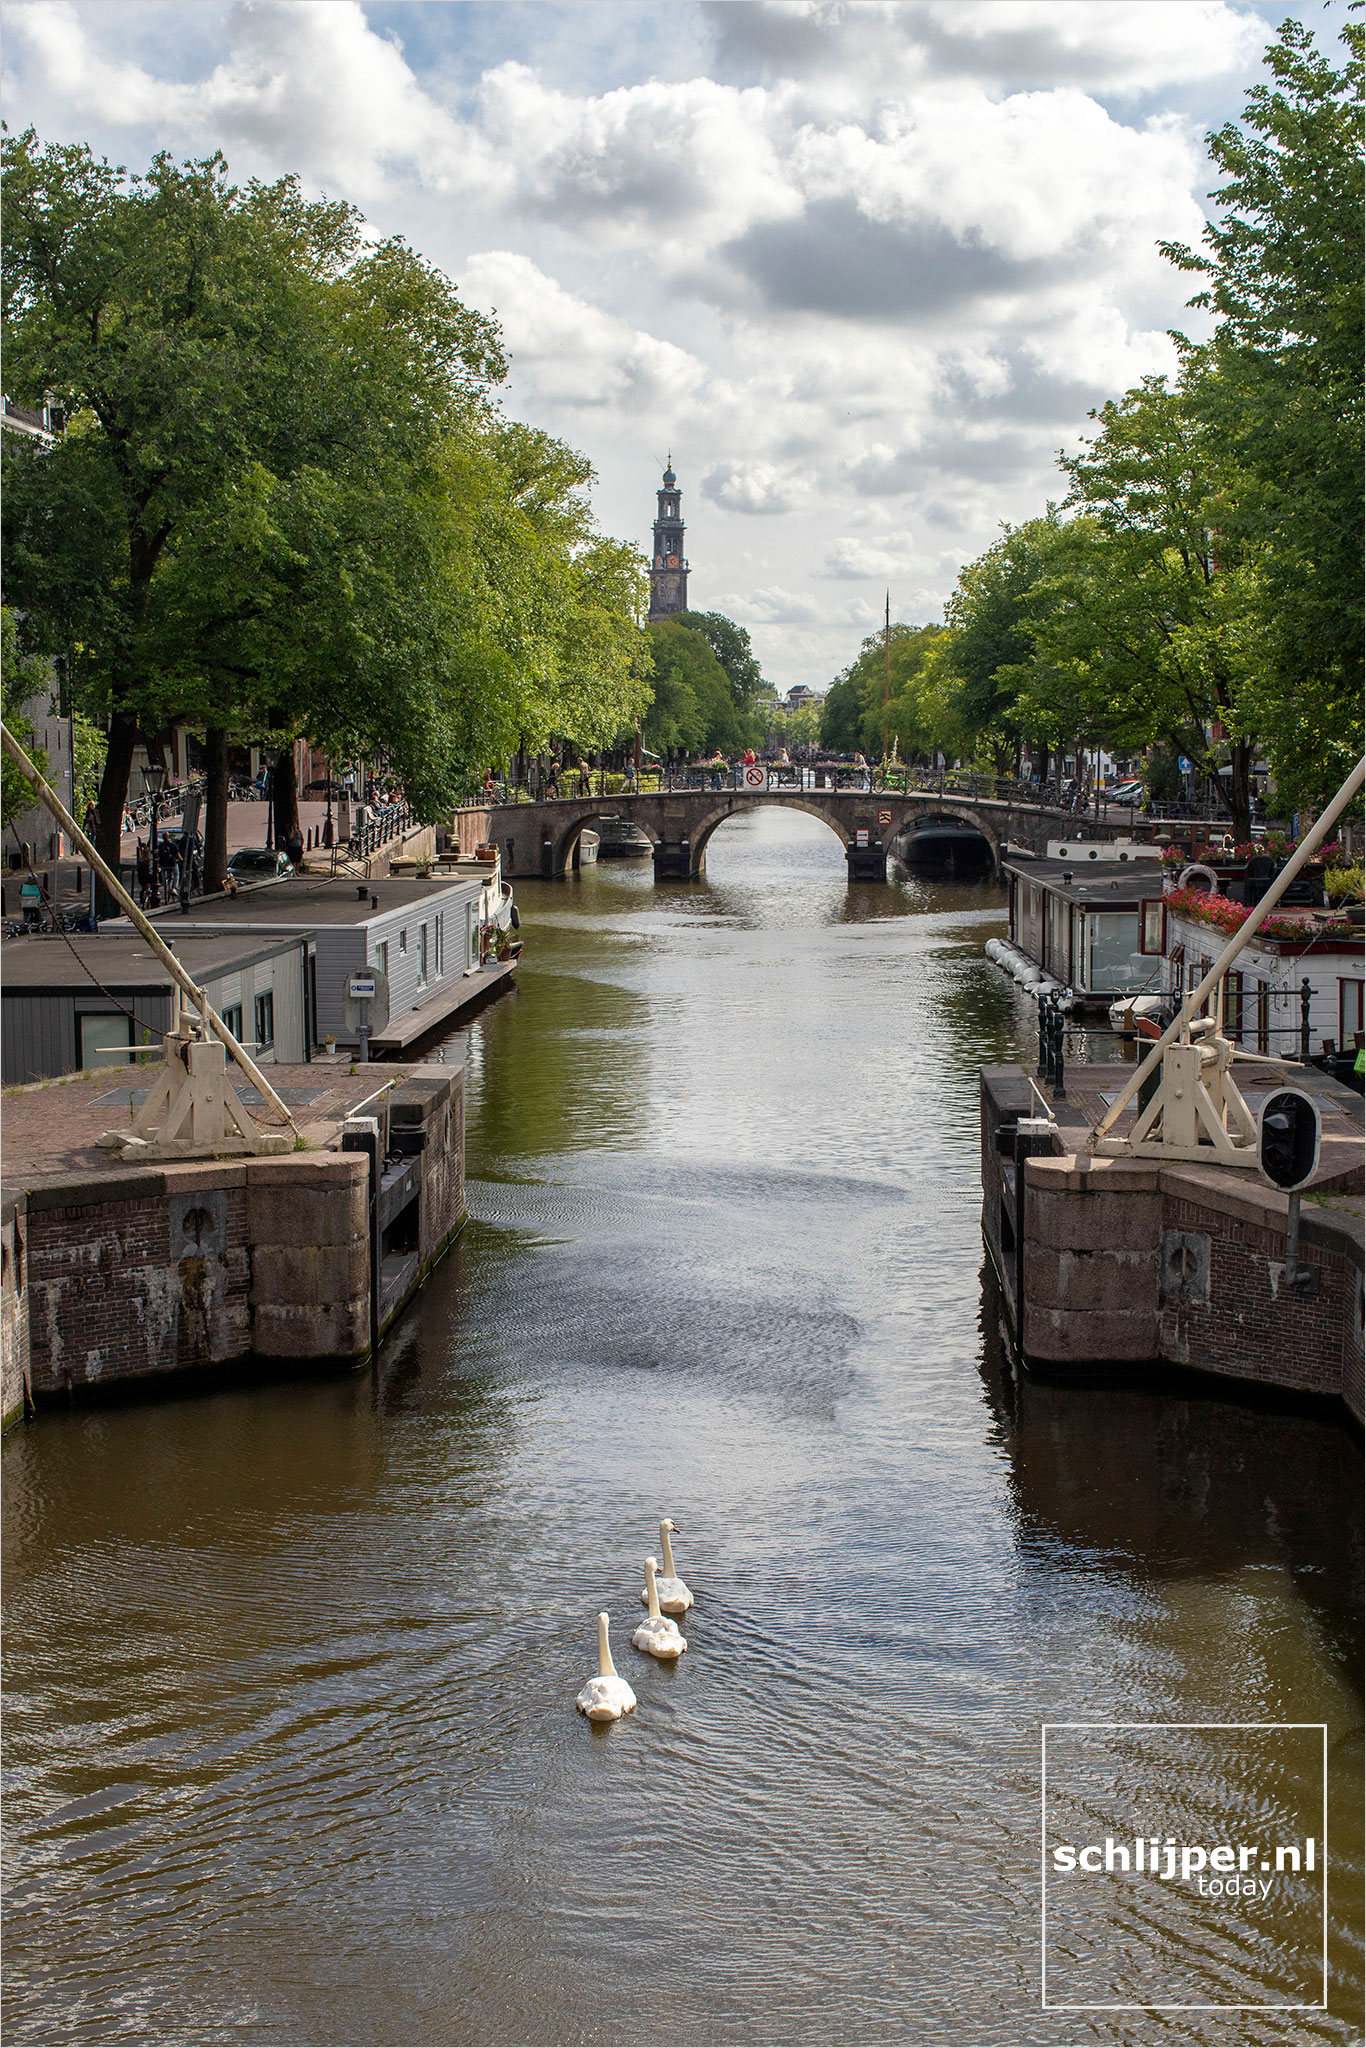 Nederland, Amsterdam, 1 juli 2020